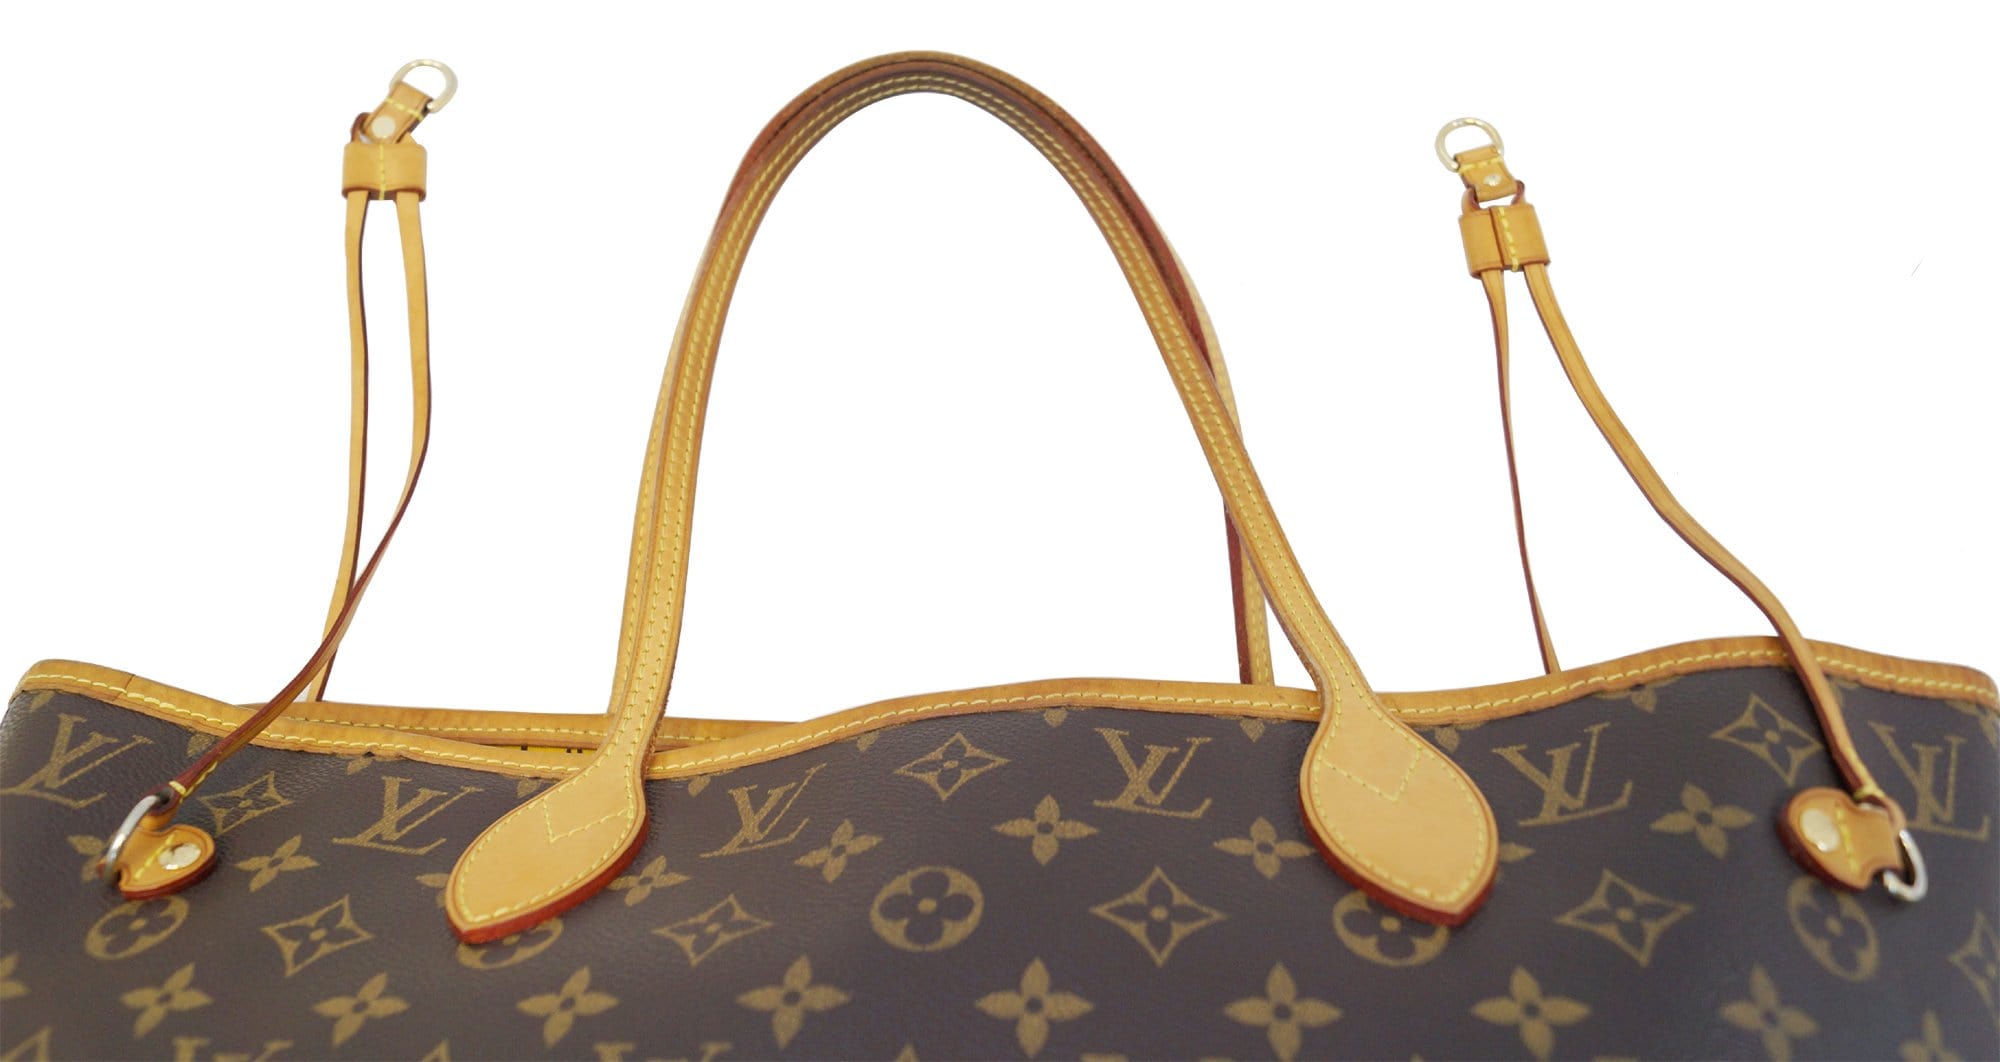 LOUIS VUITTON Monogram Neverfull MM Shoulder Bag Handbag Medium